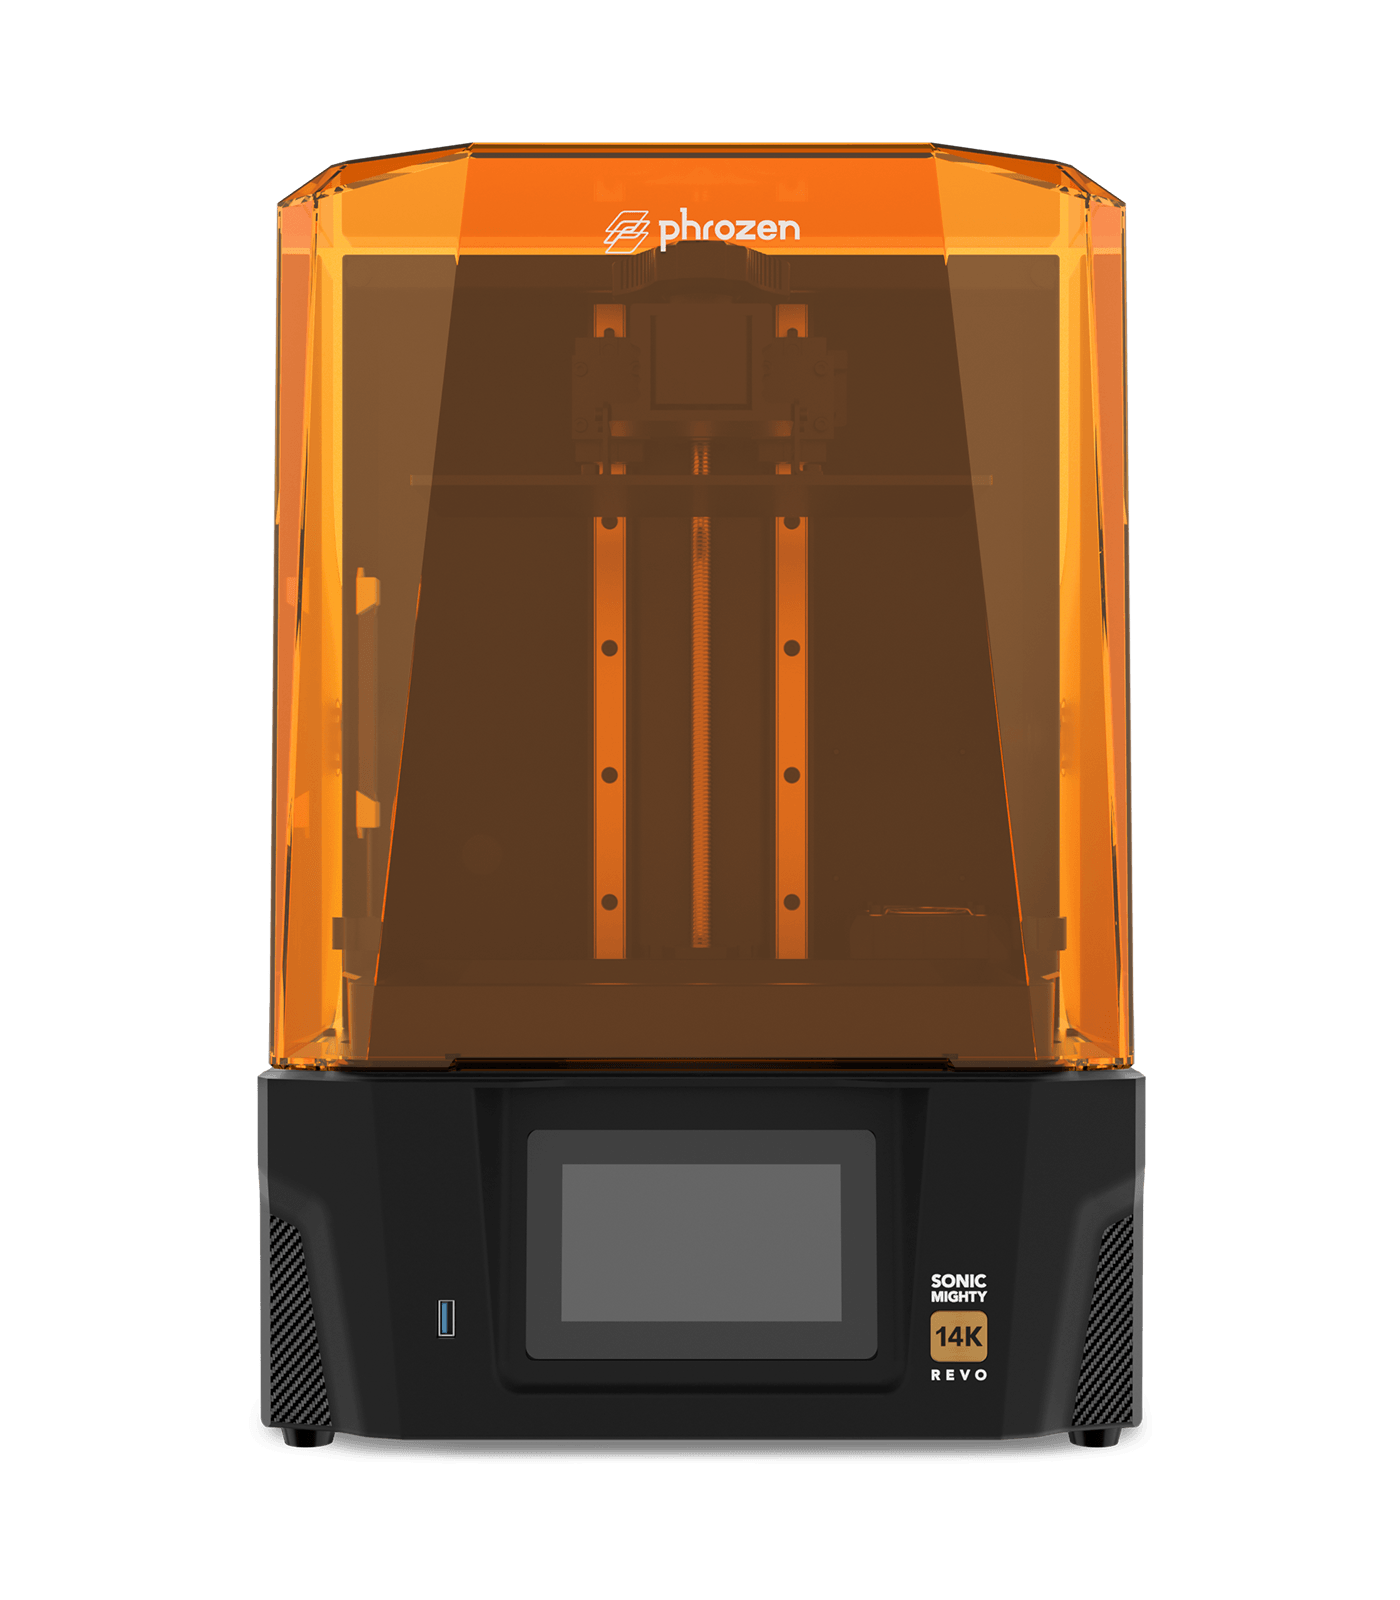 [Send Elegoo Mercury XS if you buy] Phrozen Sonic Mighty Revo 14k Resin 3D Printer A Smarter Printer for a Smarter Workflow - Antinsky3d